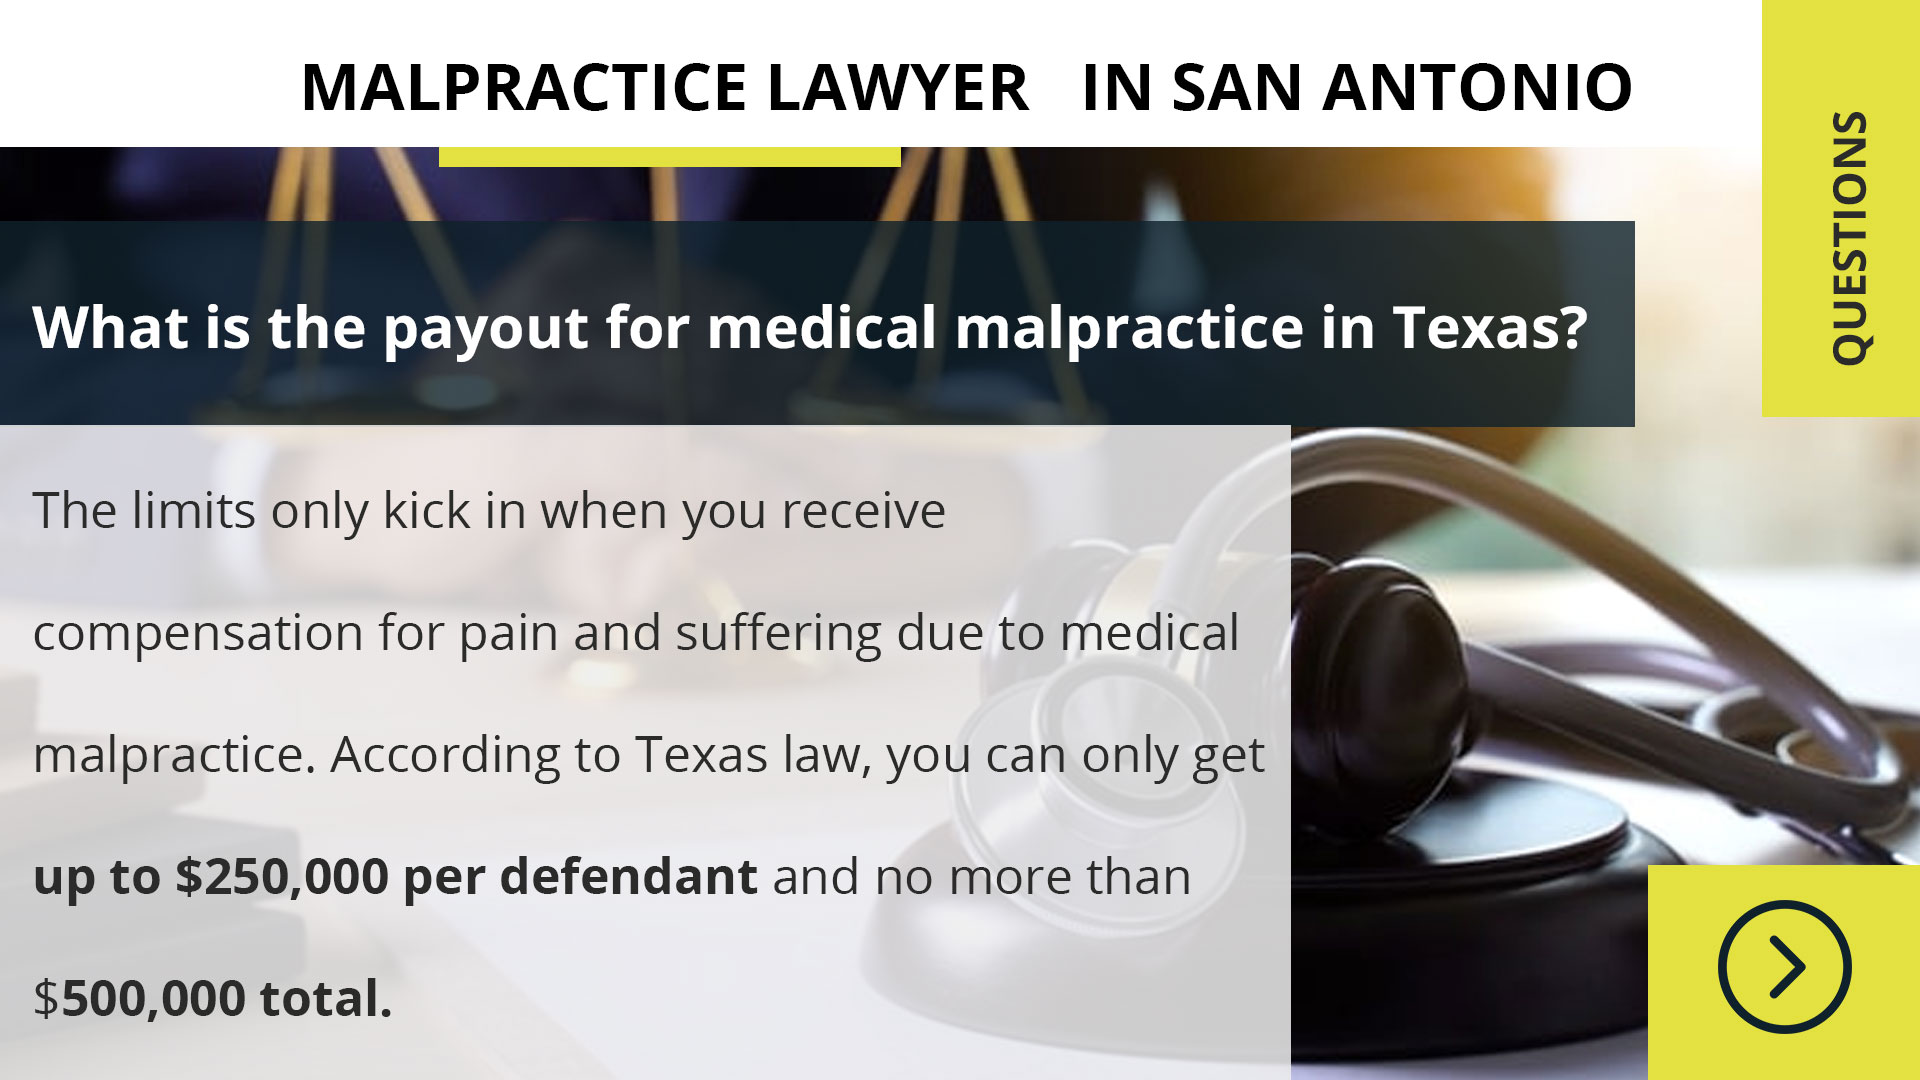 Malpractice lawyer